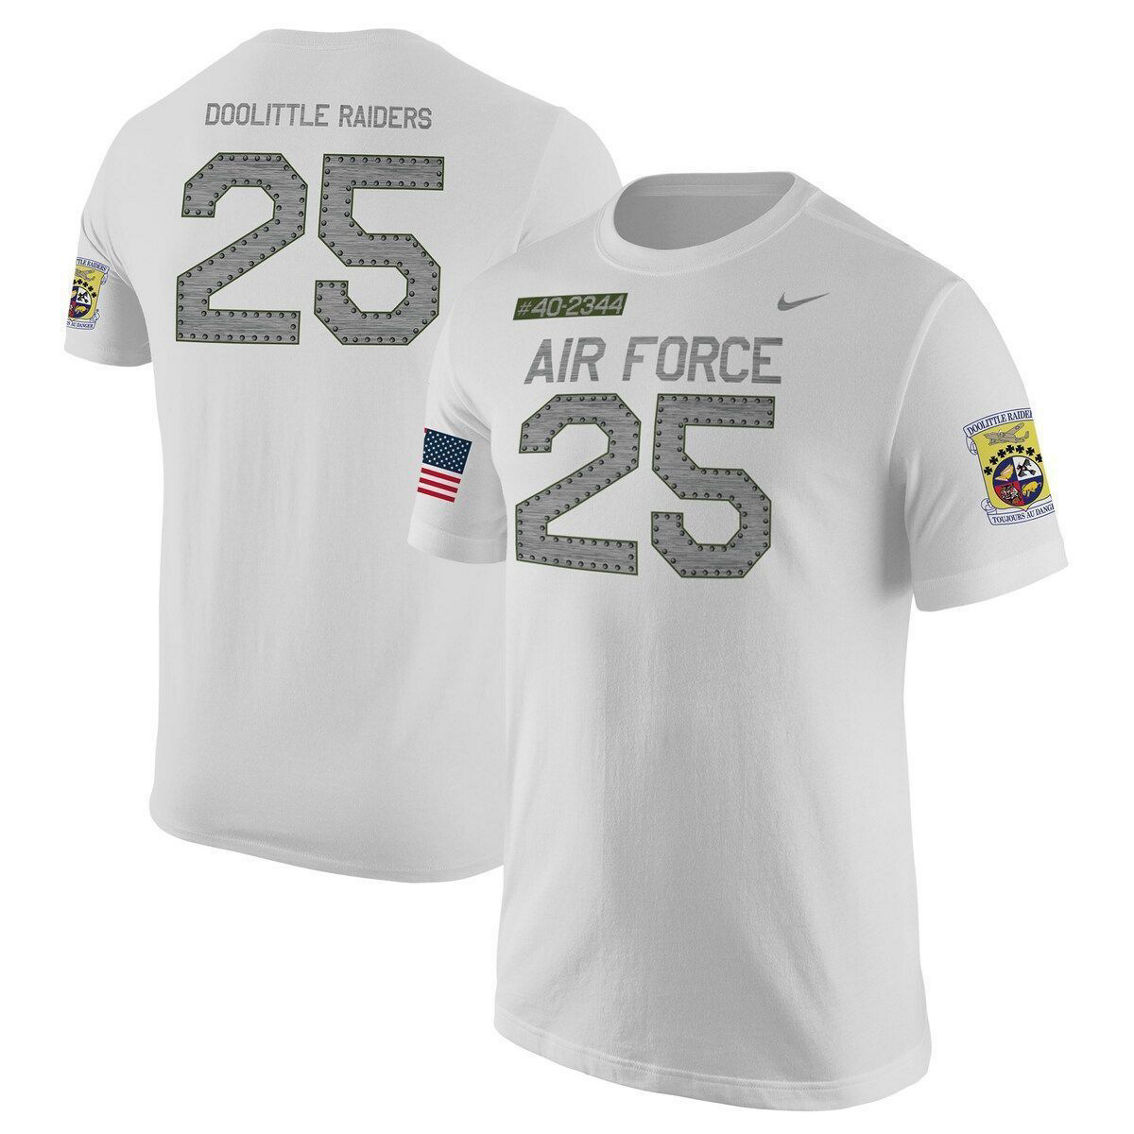 Nike Men's White Air Force Falcons Rivalry Replica Jersey T-Shirt - Image 2 of 4